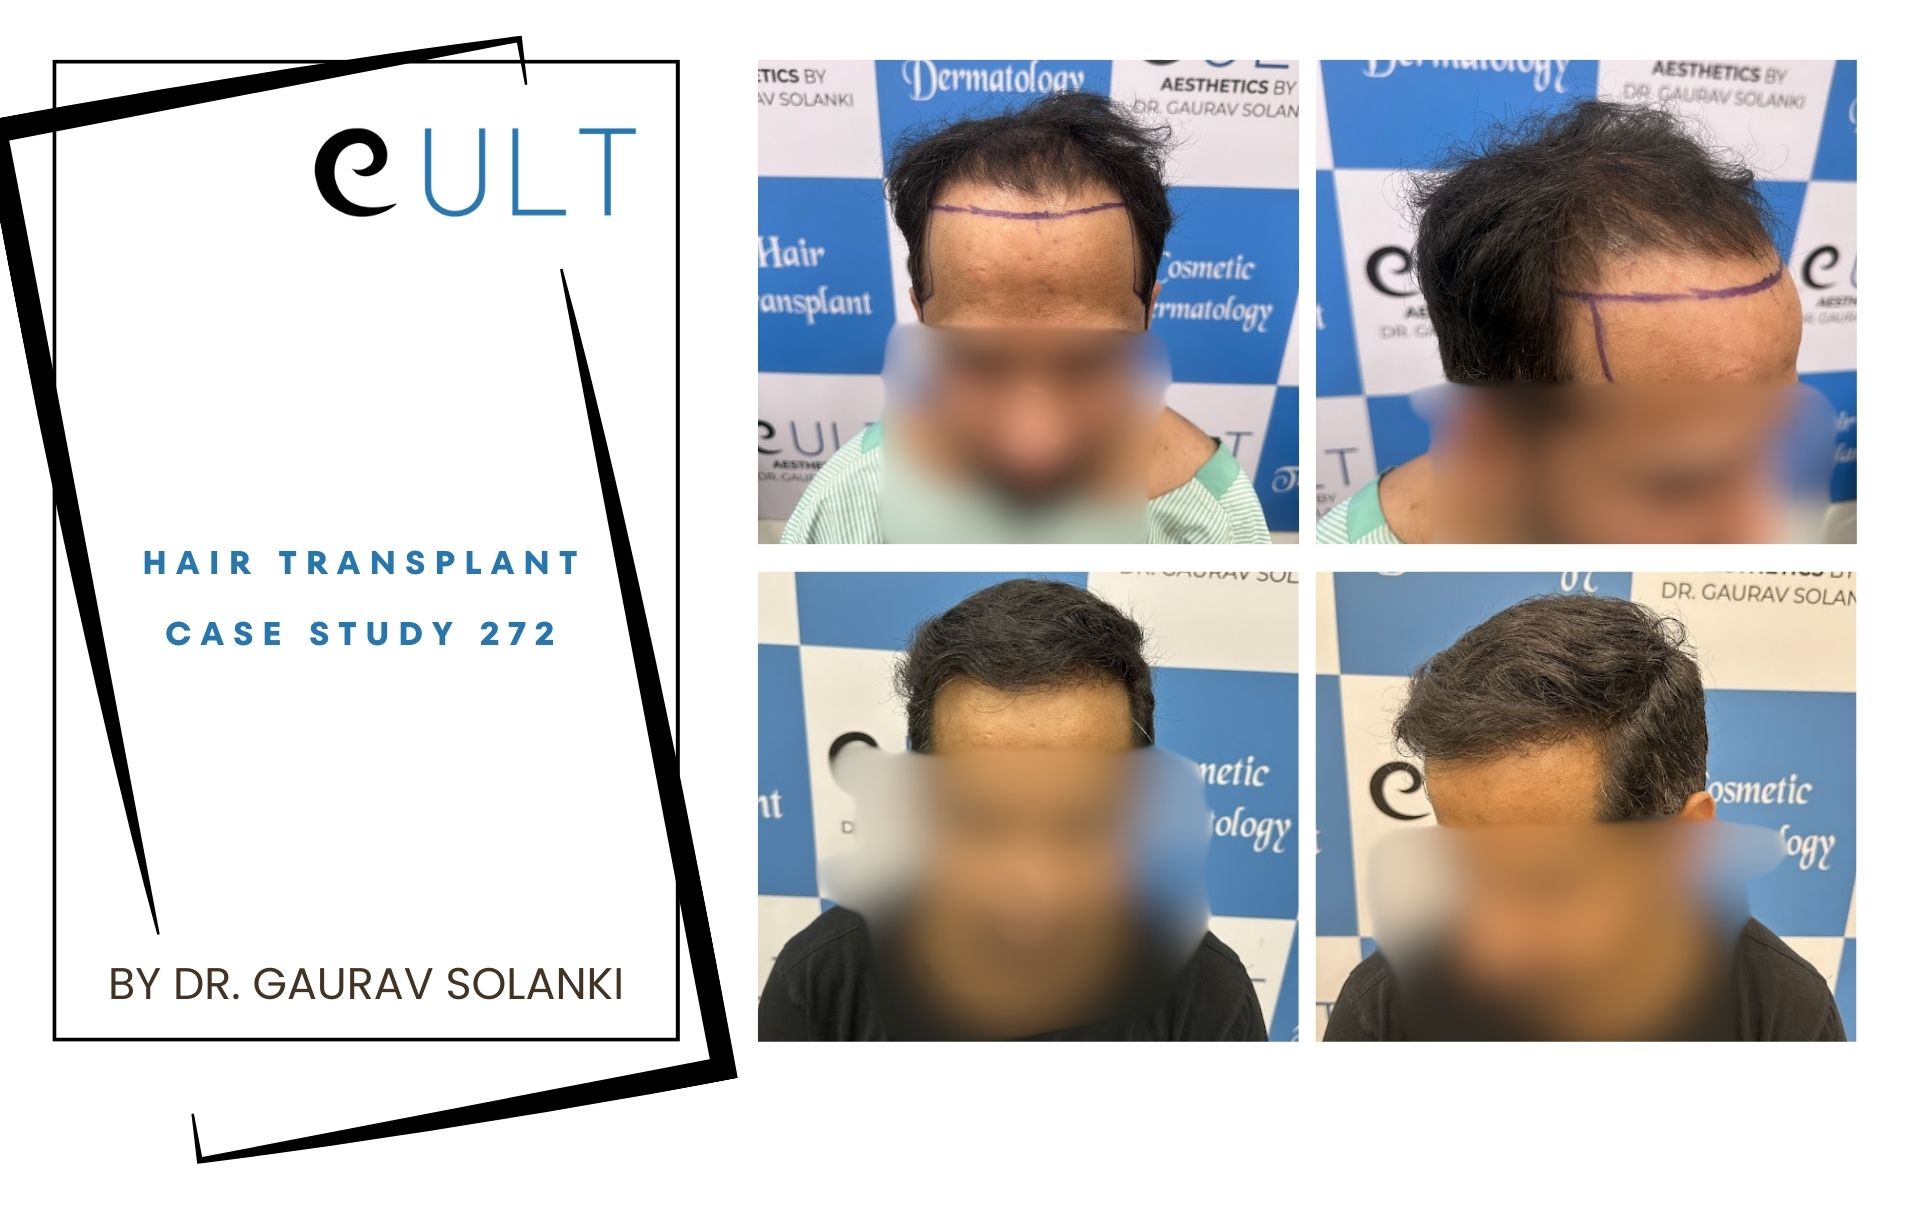 Hair Transplant case 272